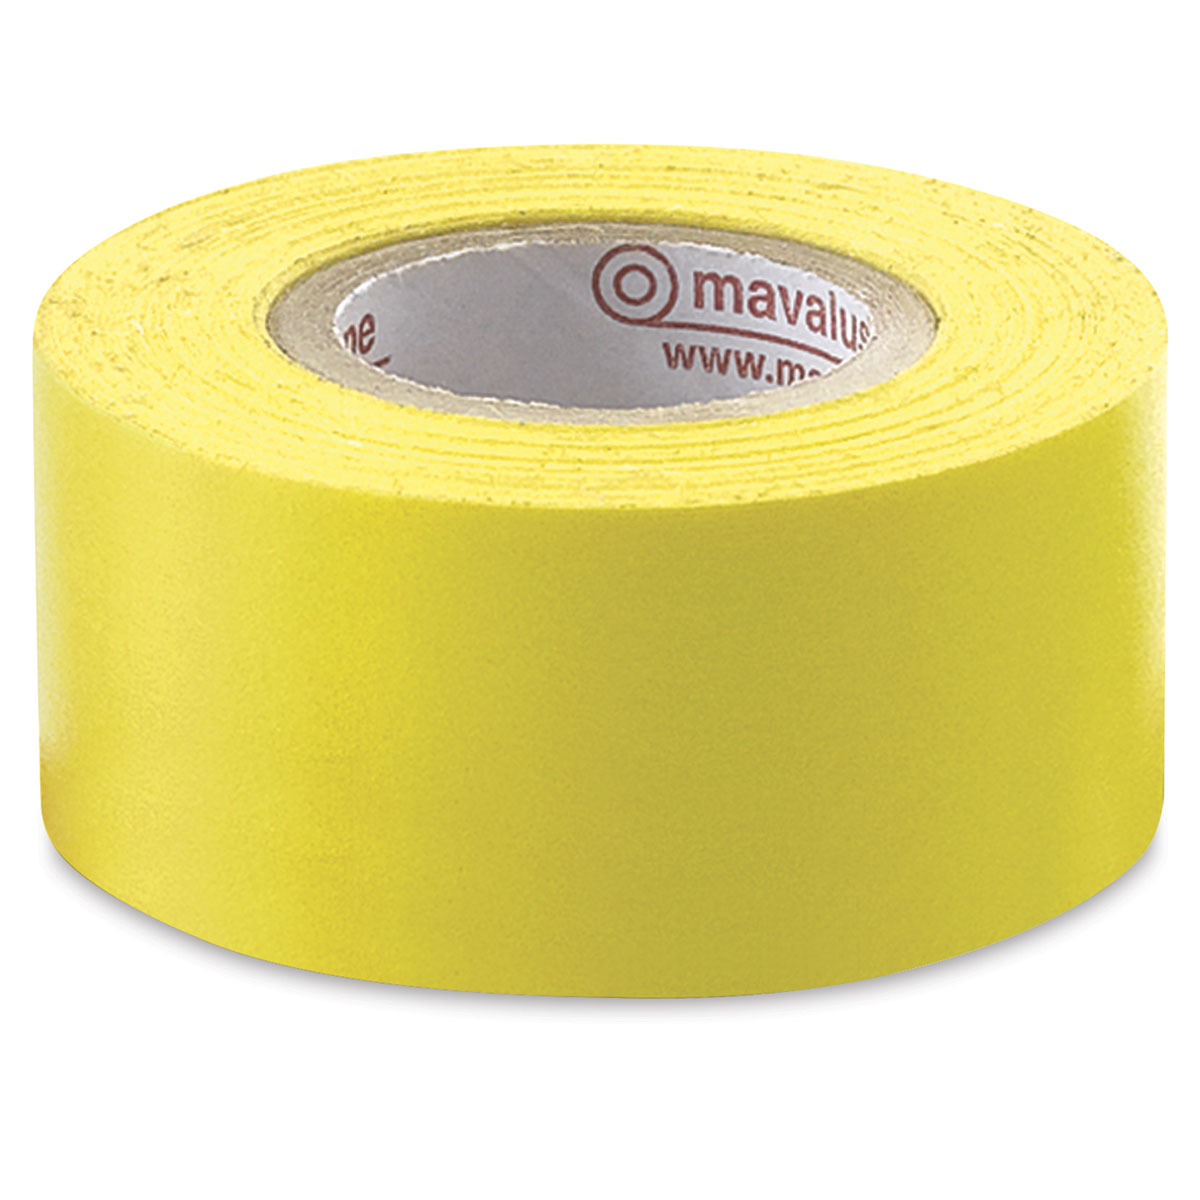 Mavalus Measurement Tape, 6 Rolls